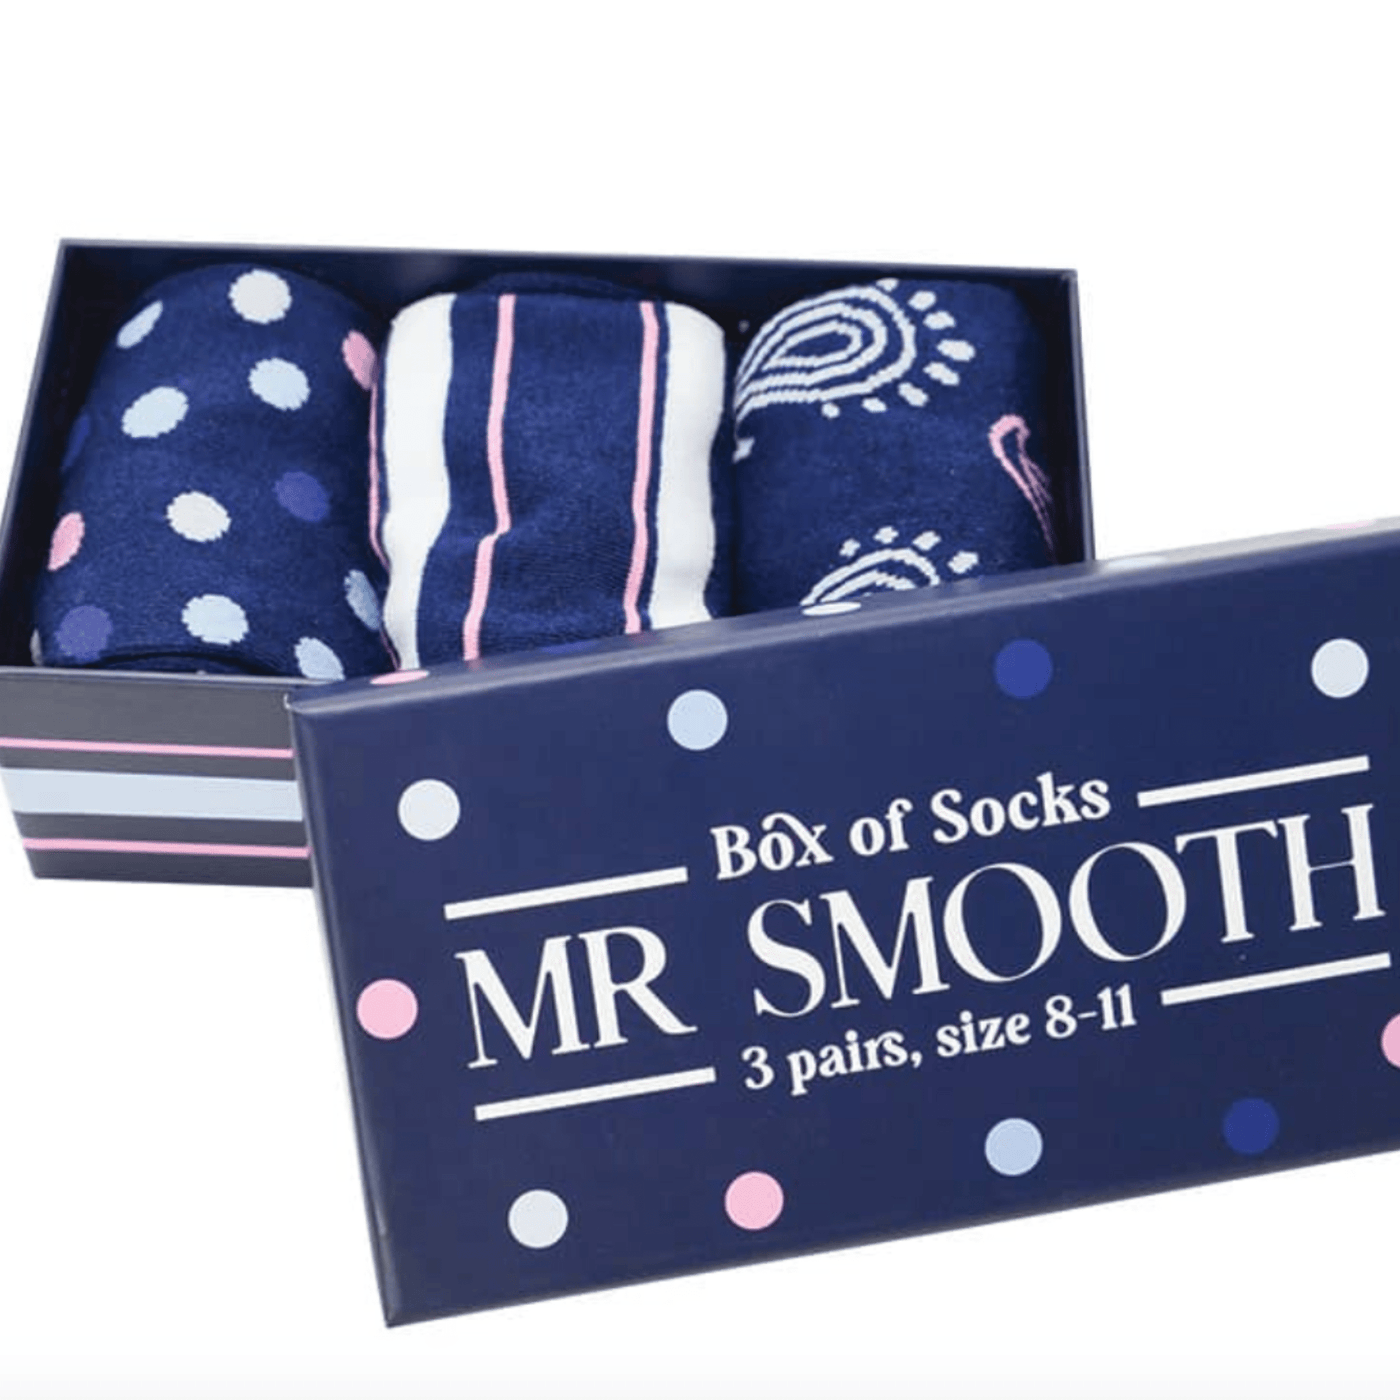 Mr Smooth Box of Socks